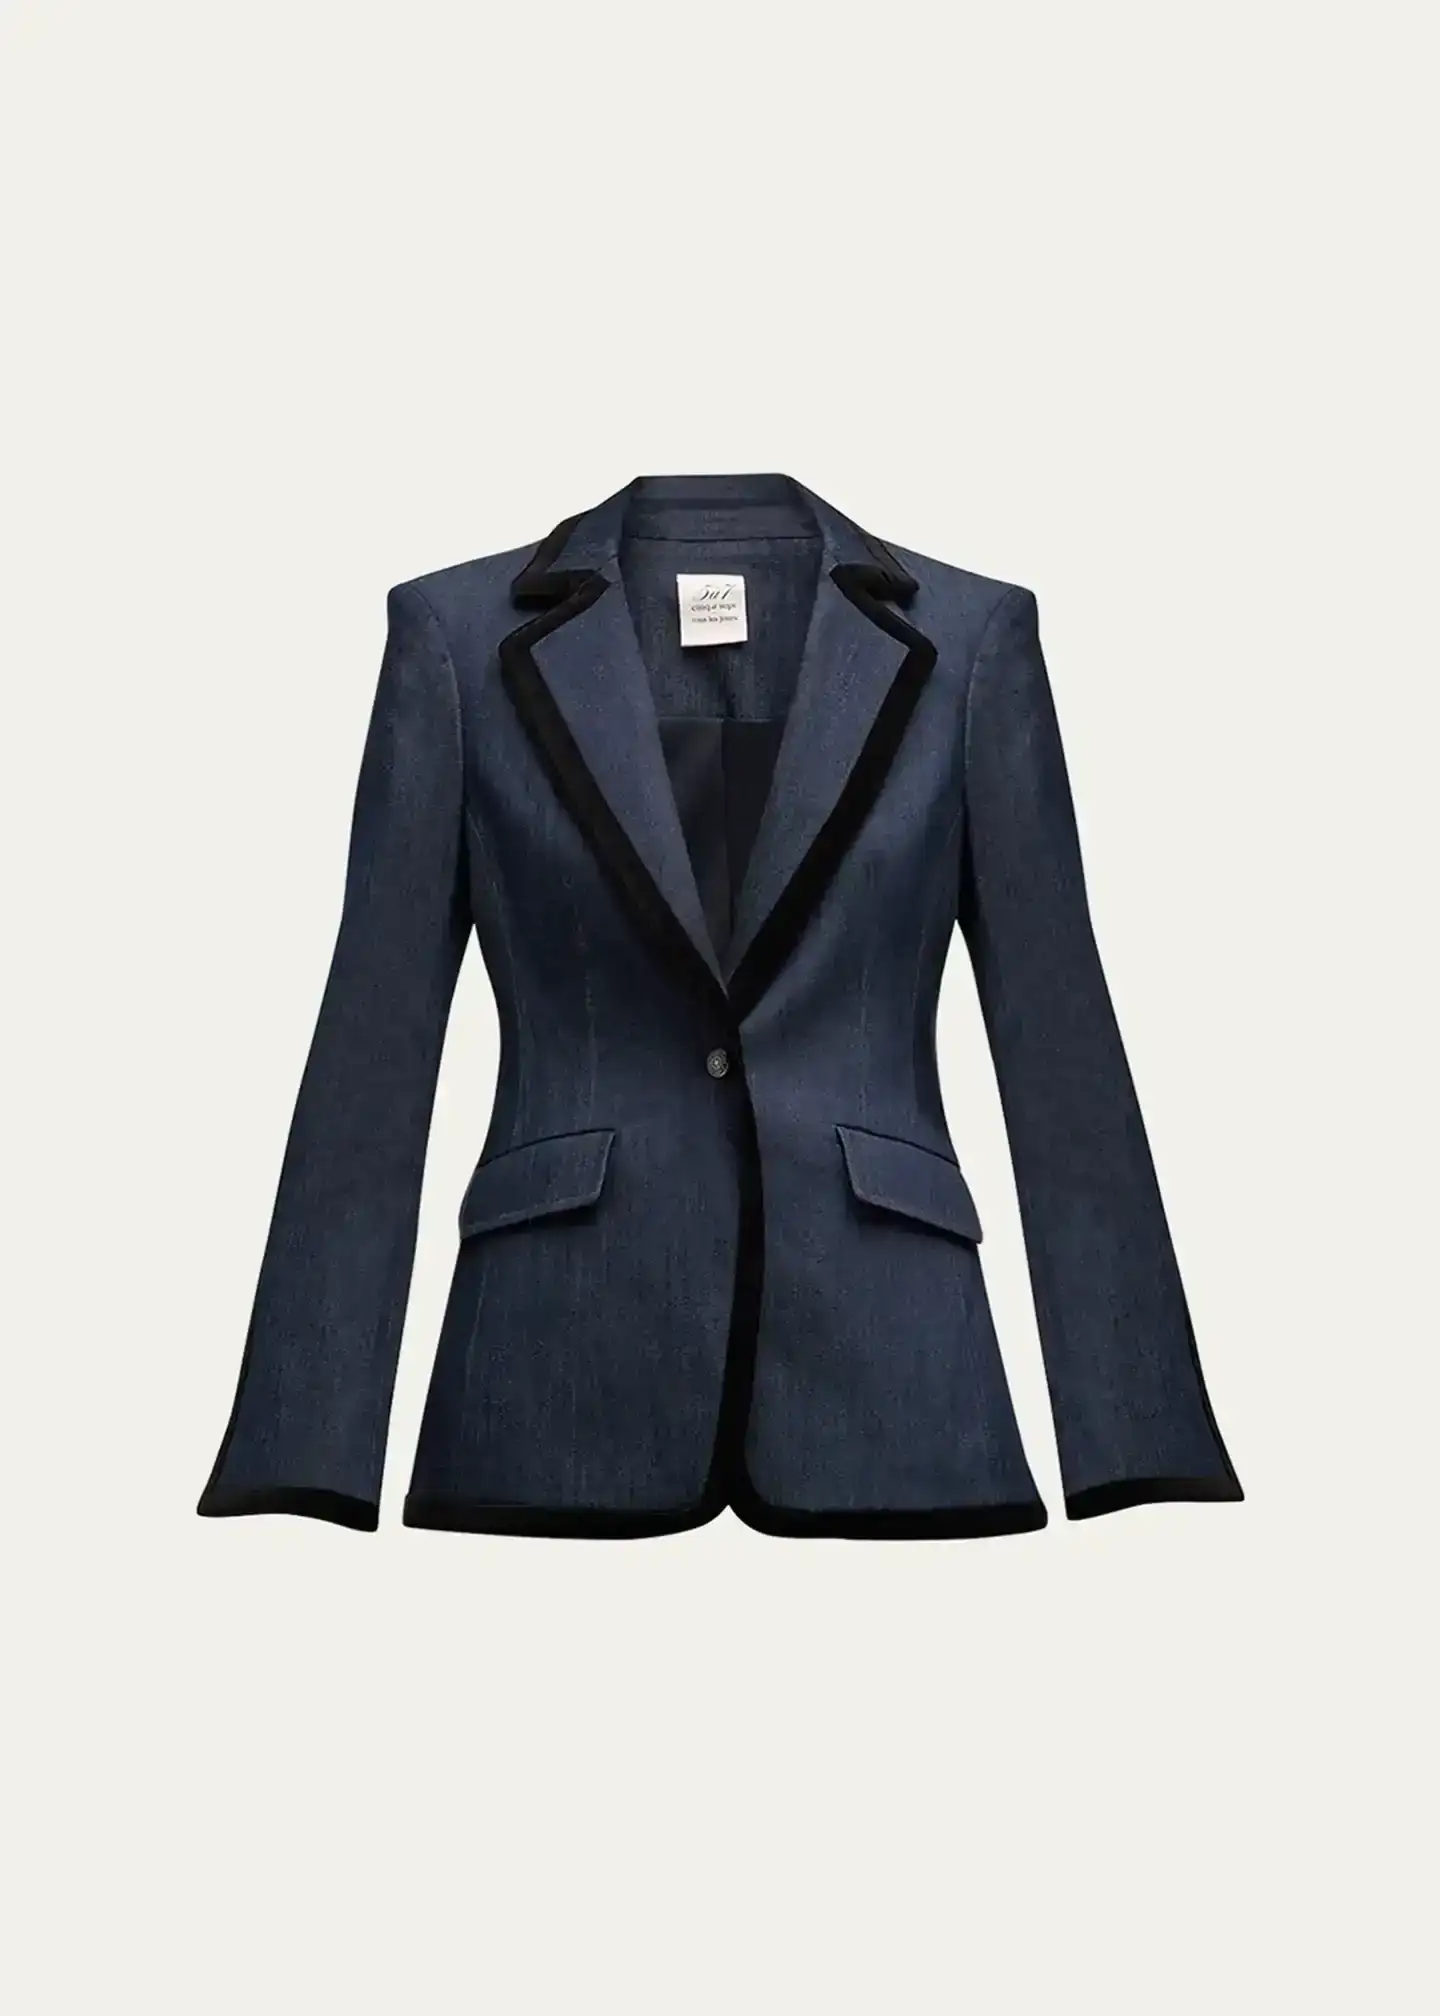 Ariane Contrast-Trim Tailored Denim Jacket